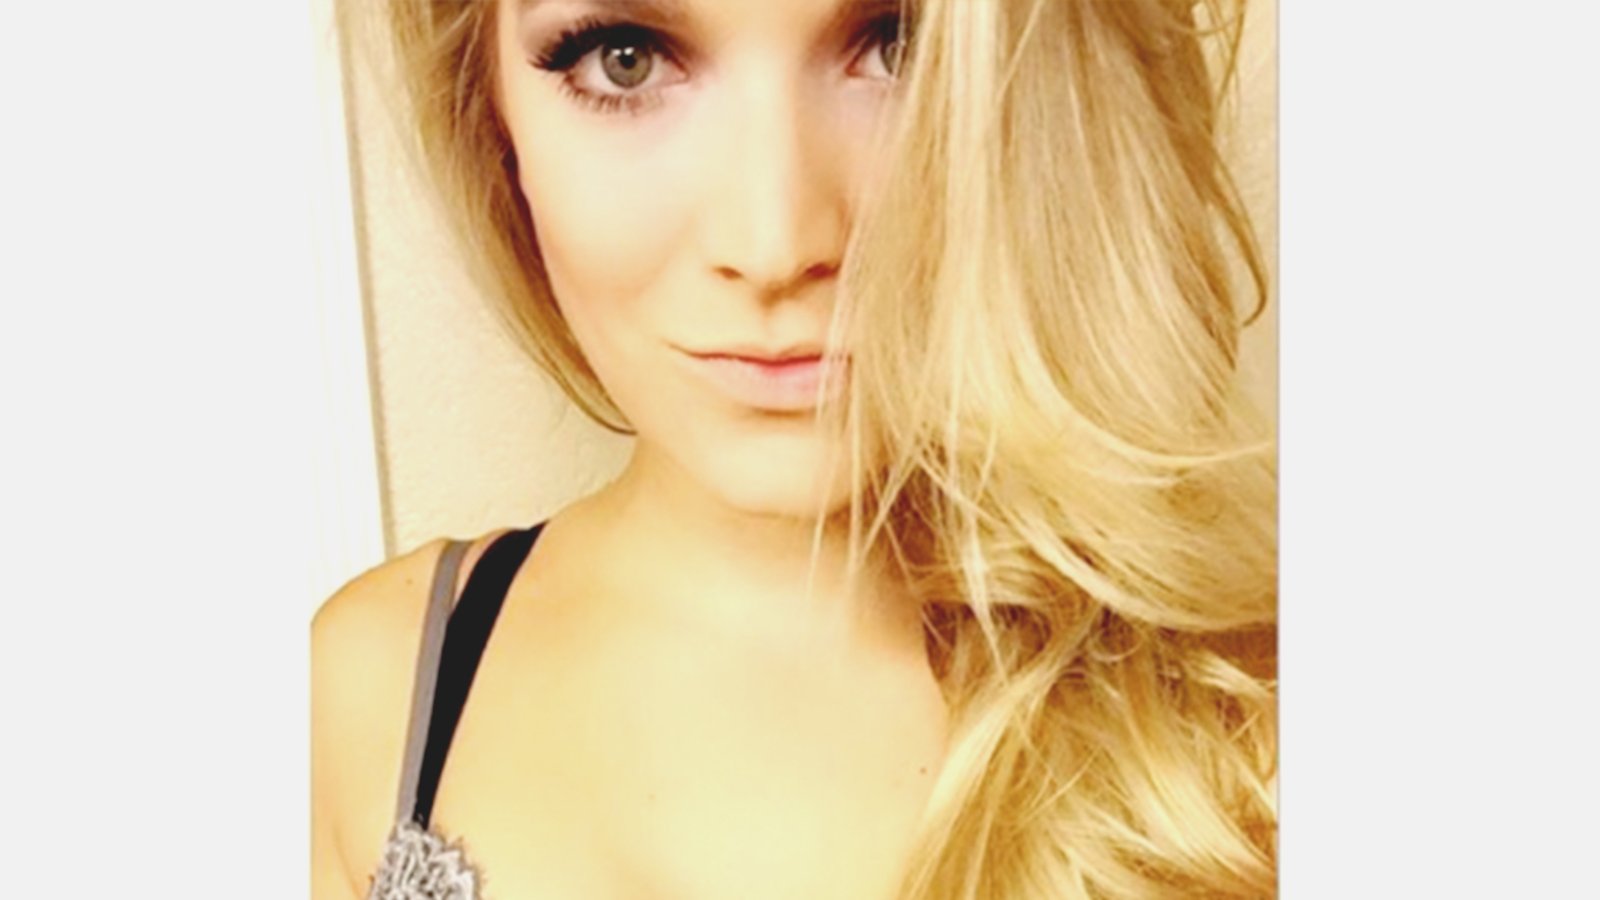 MUST SEE: NHLer’s stunning girlfriend posts revealing photo online.